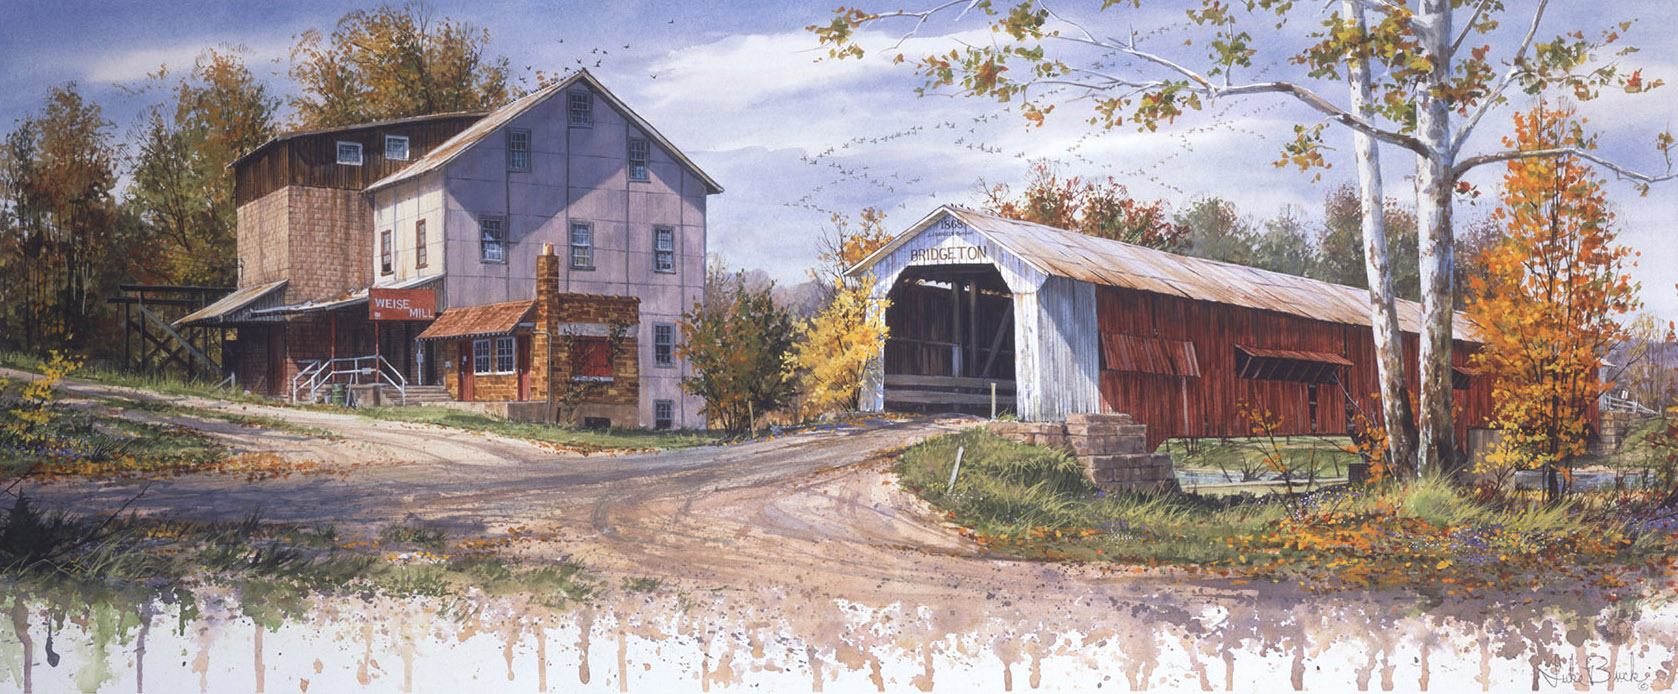 LB – Rural America – Bridgeton Weise Mill C © Luke Buck